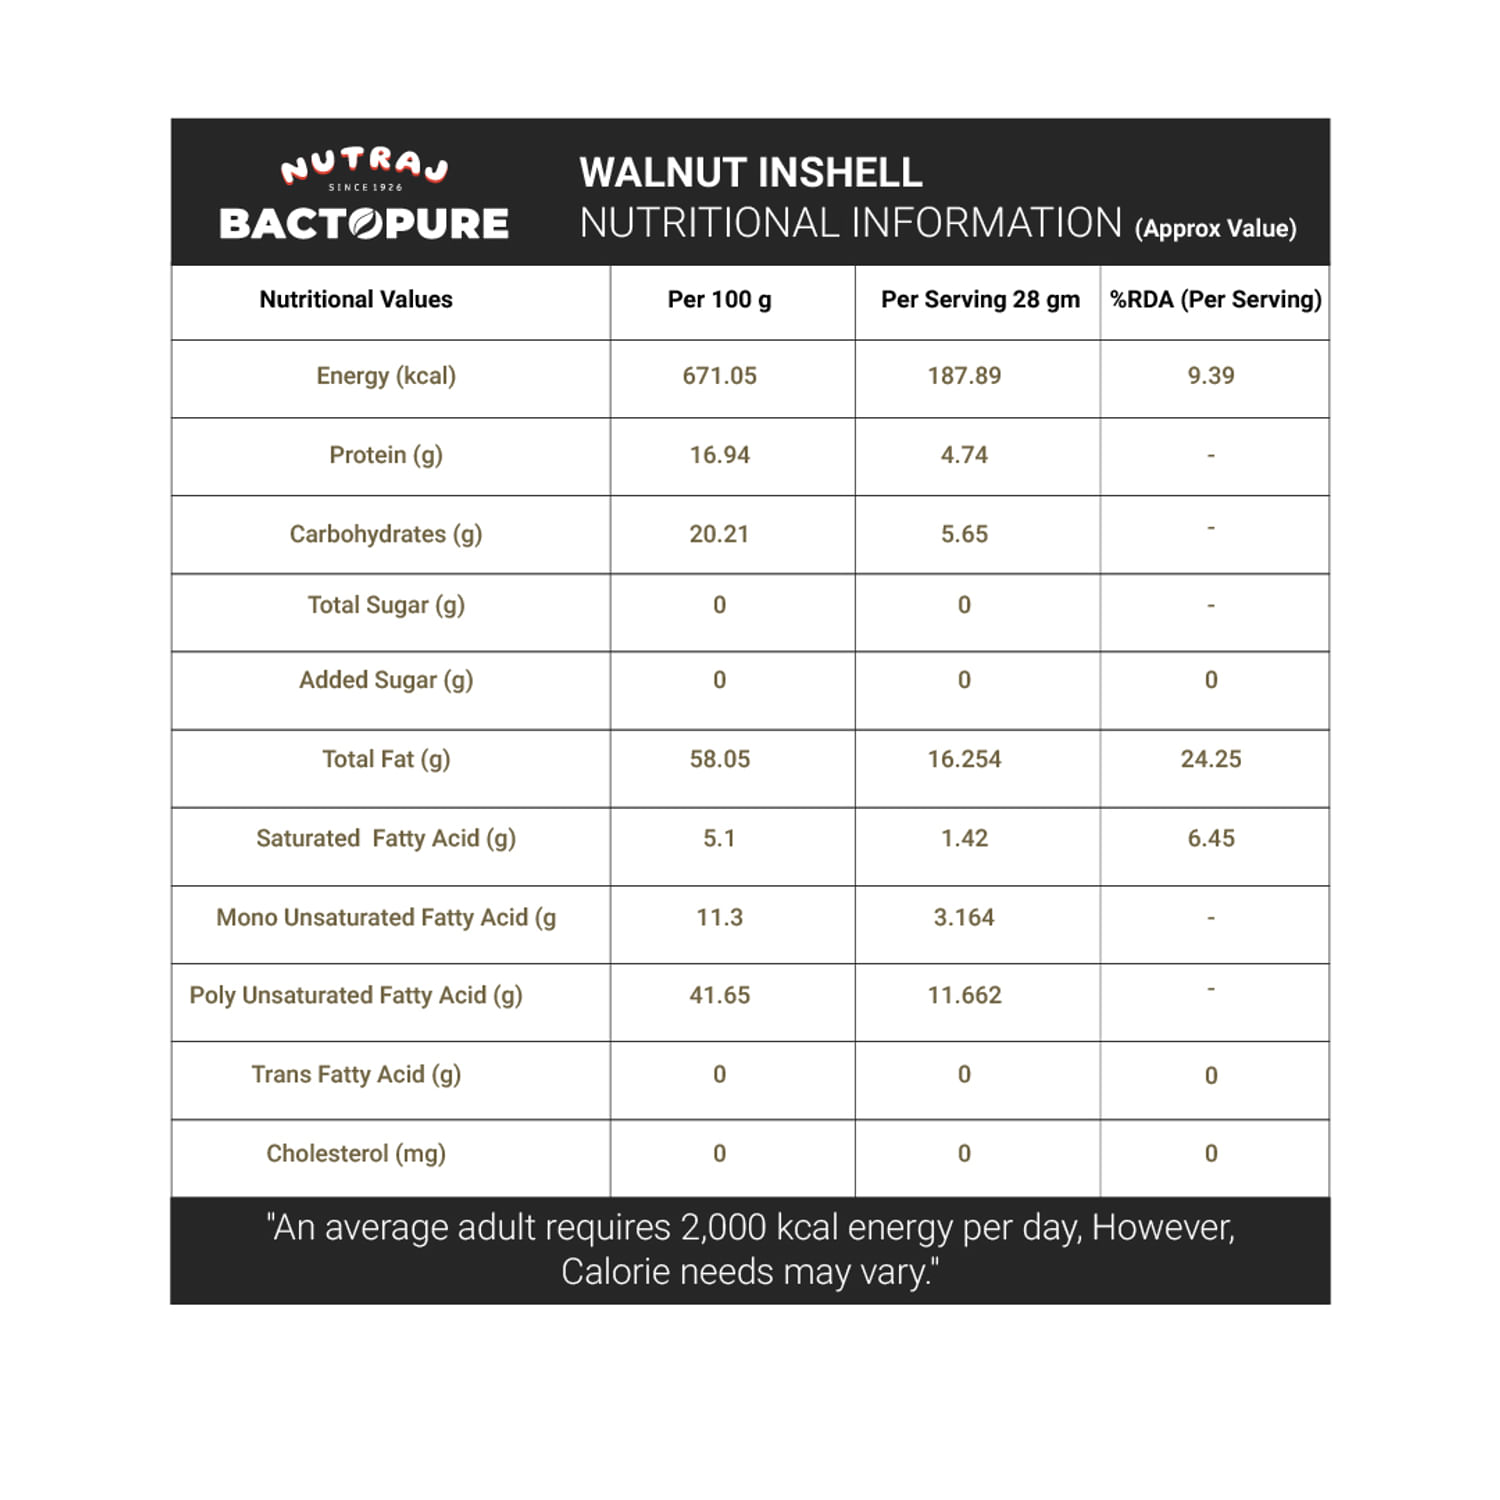 Bactopure Walnut Inshell 500 gm